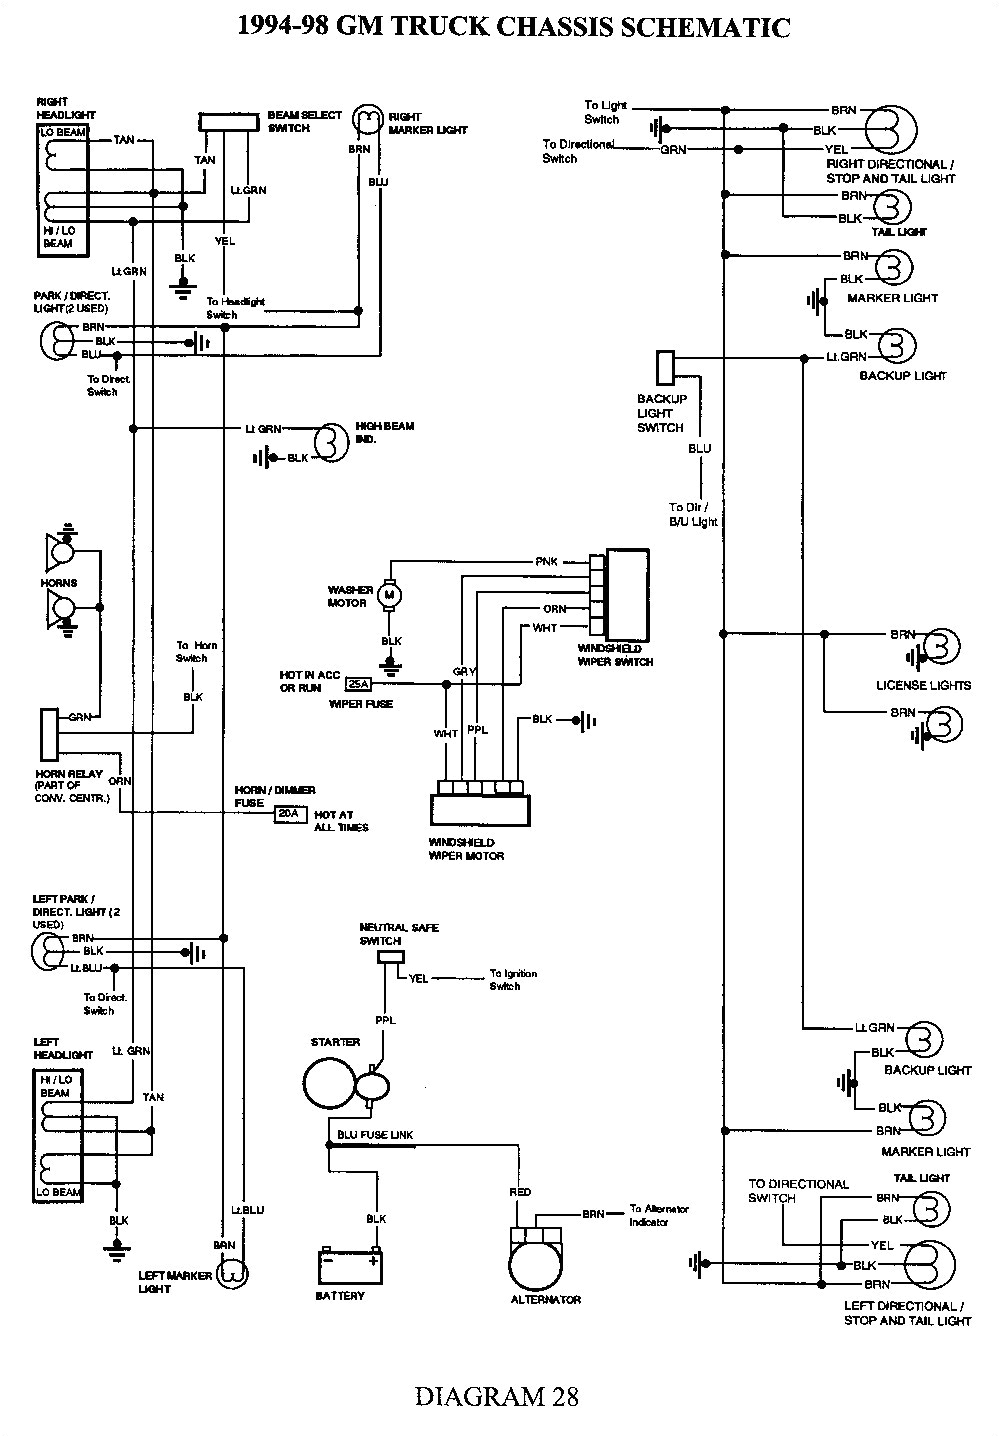 1998 chevrolet c1500 wiring diagram wiring diagram operations 1998 silverado wiring diagram home wiring diagram 1998